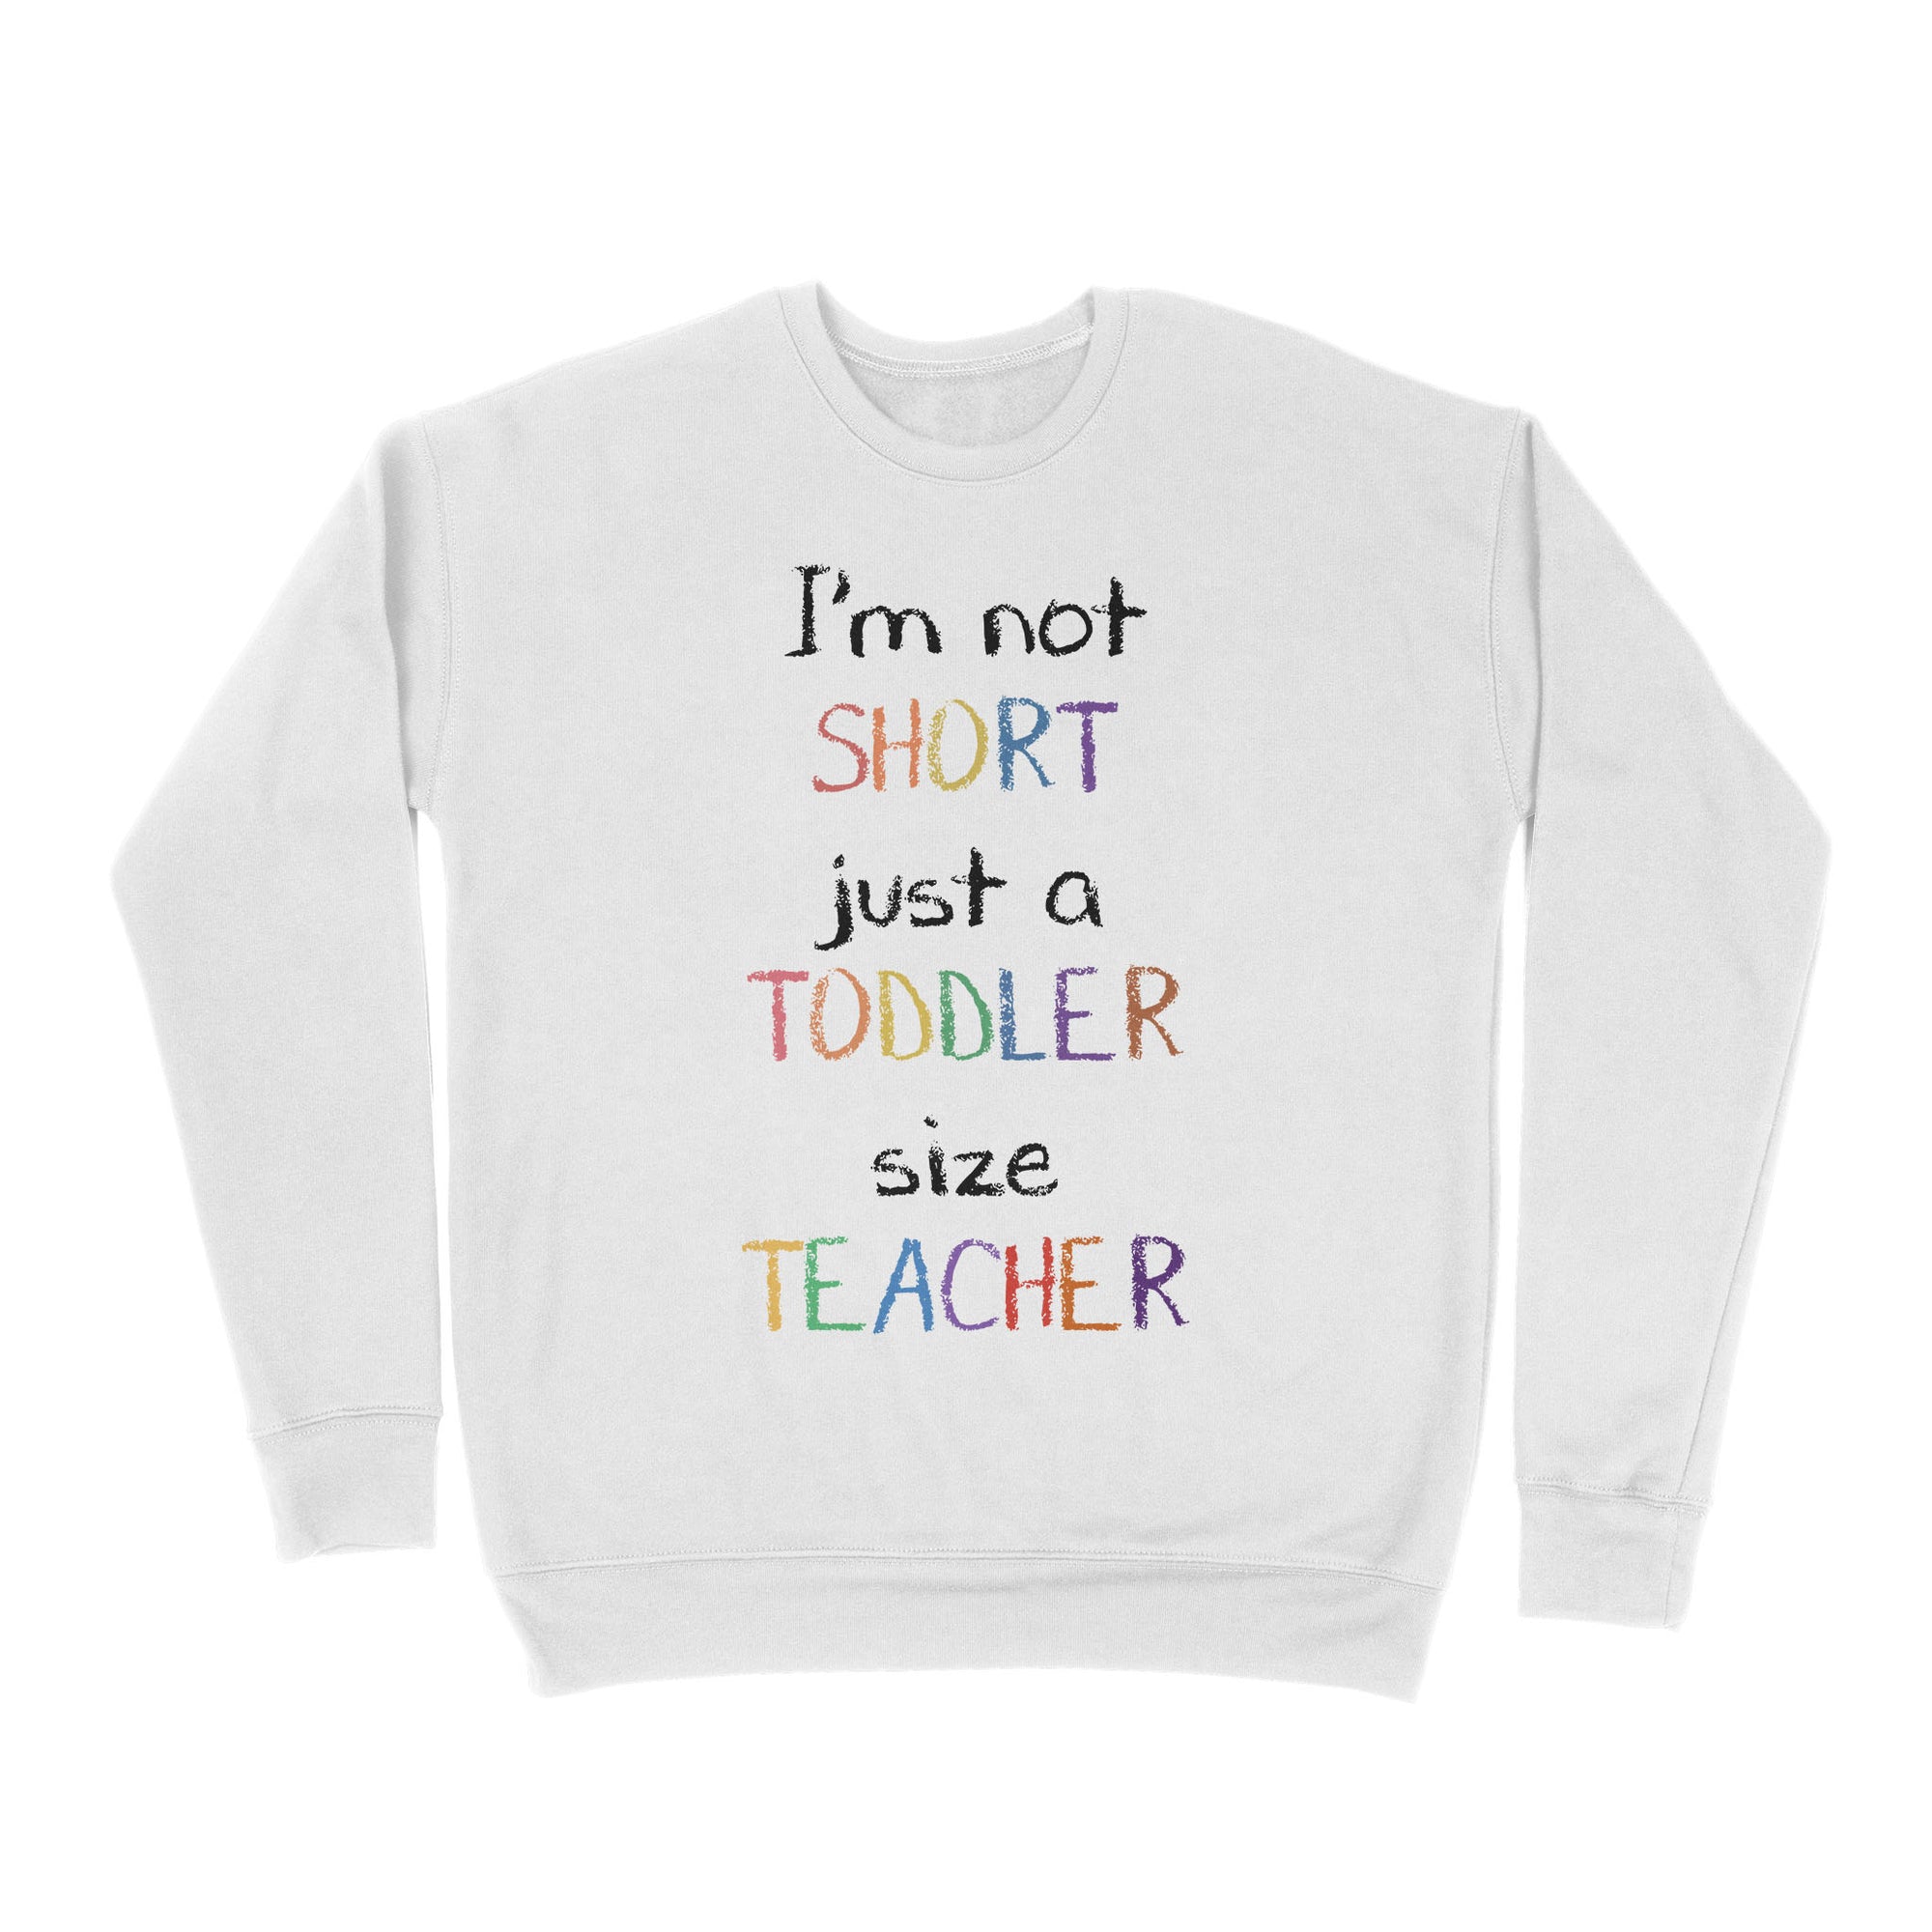 Premium Crew Neck Sweatshirt - I’m Not Short Just A Toddler Size Teacher